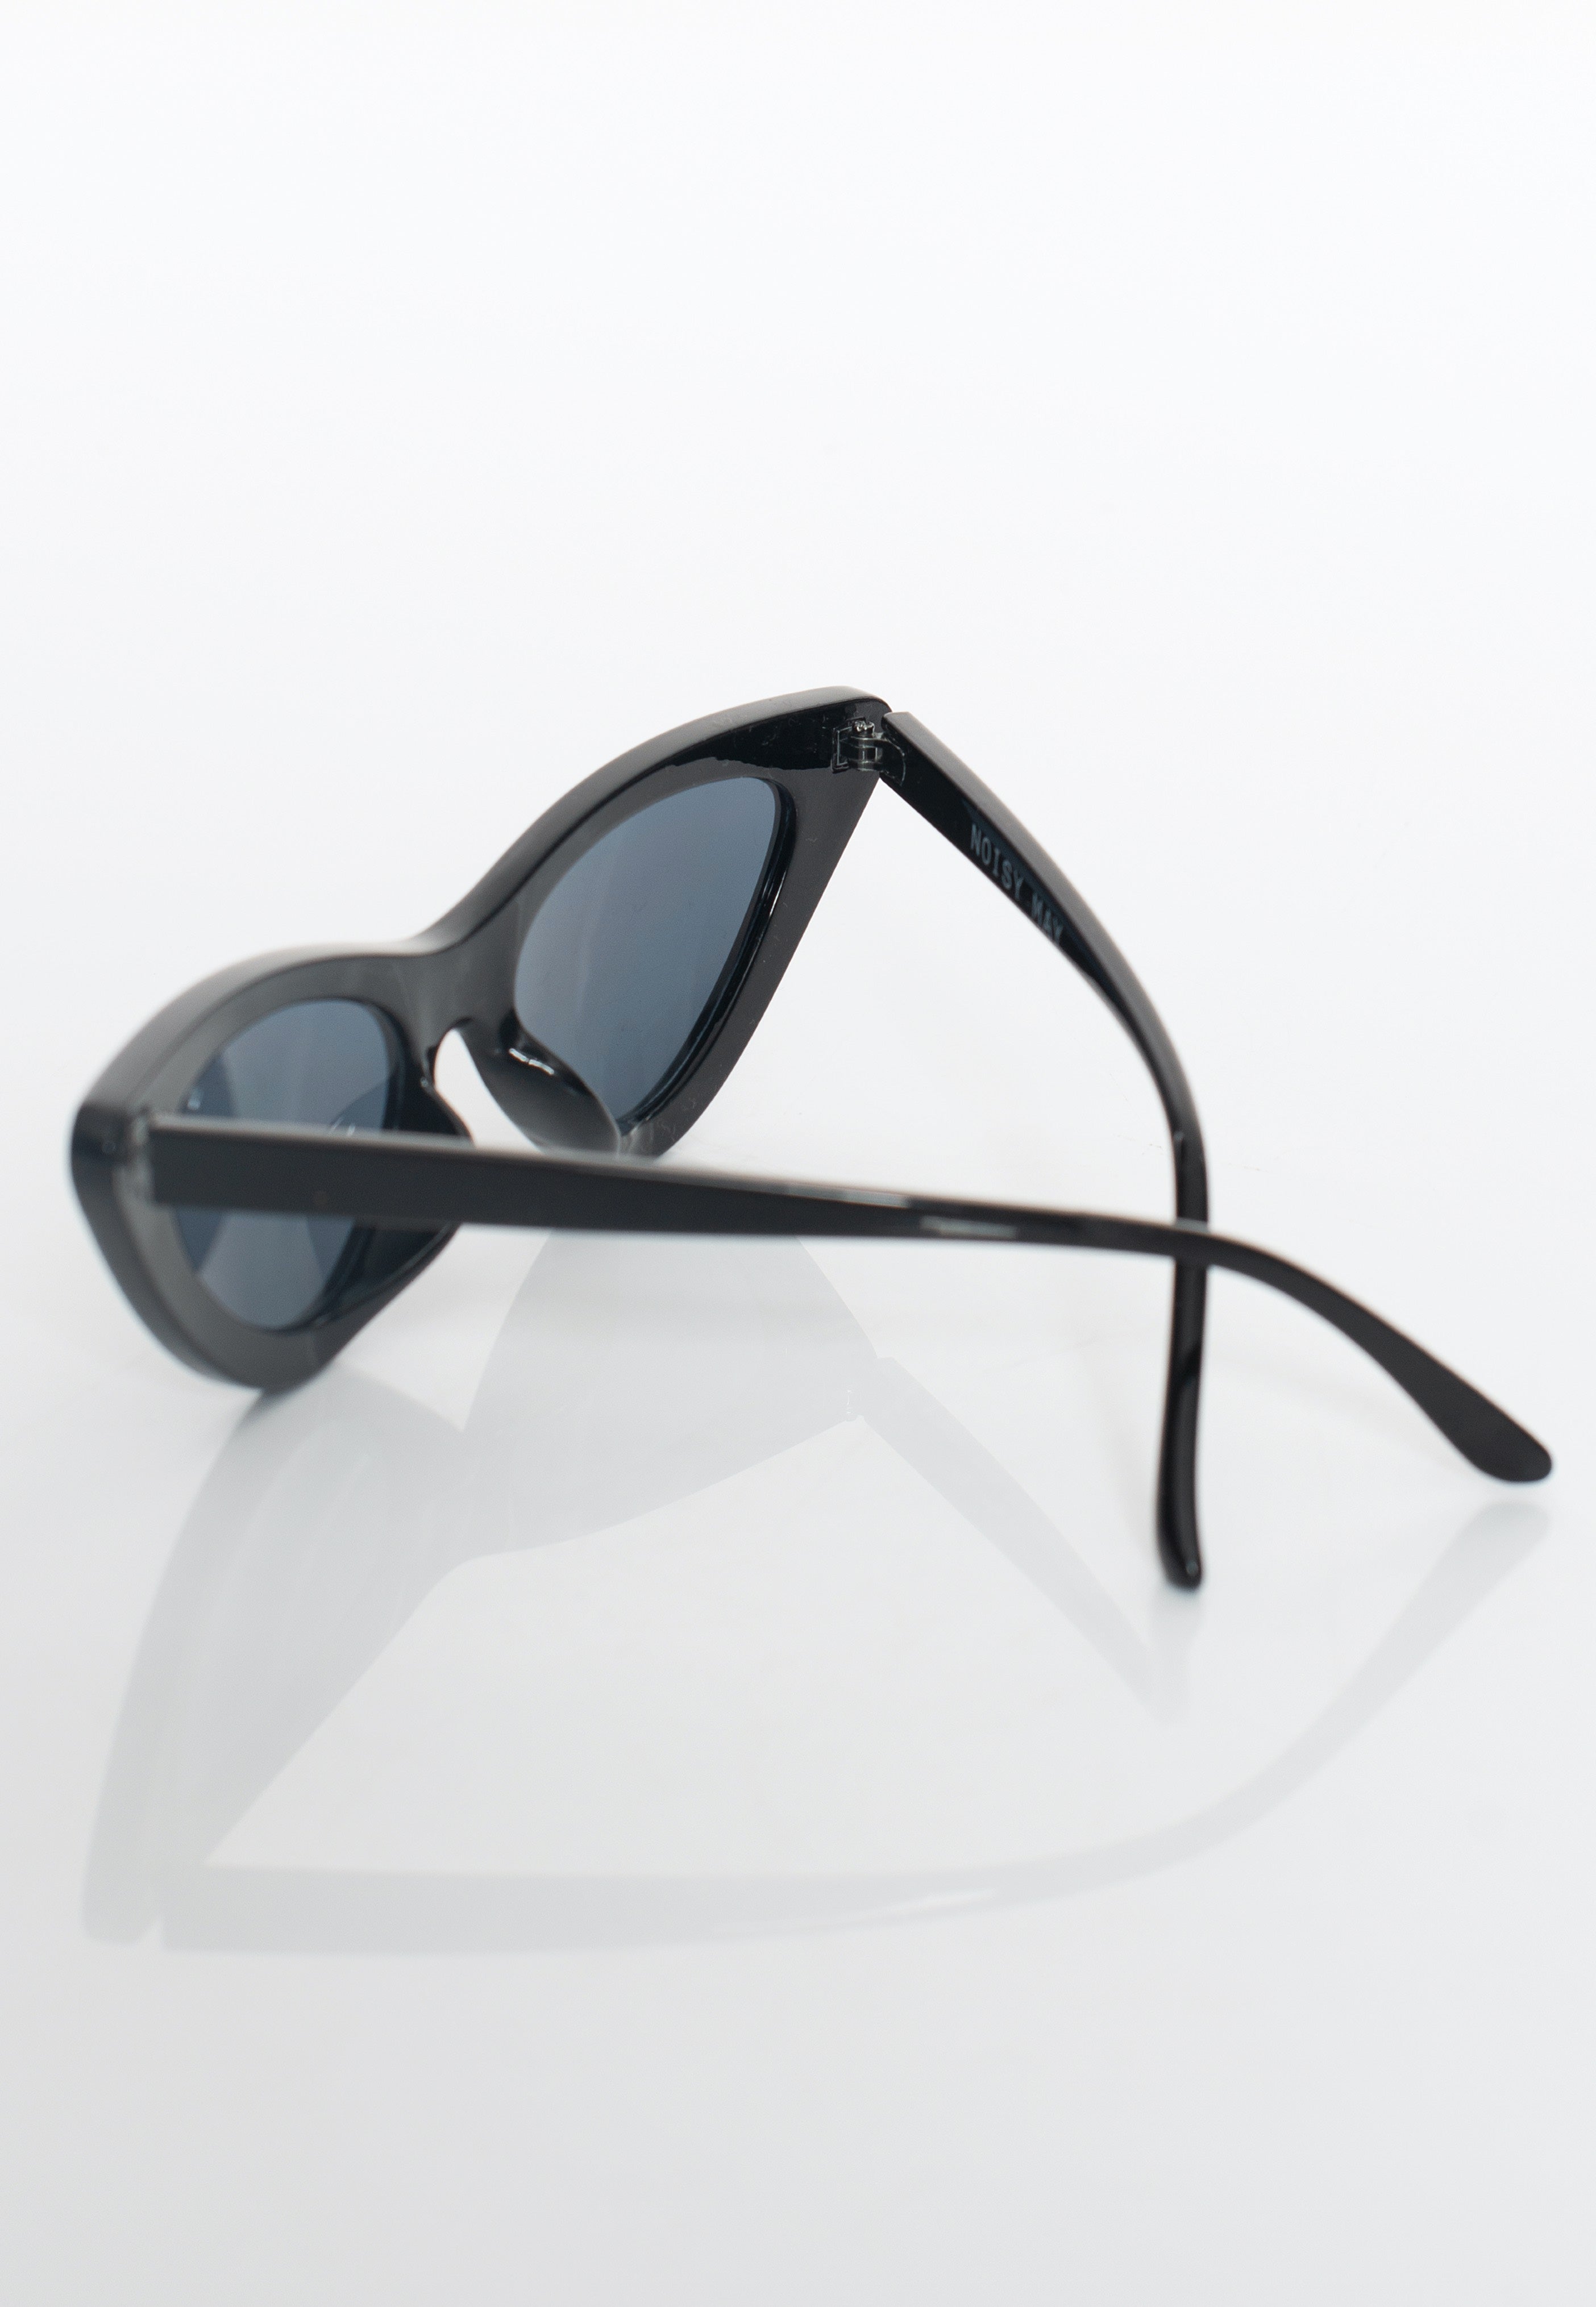 Noisy May - Maiken Black - Sunglasses